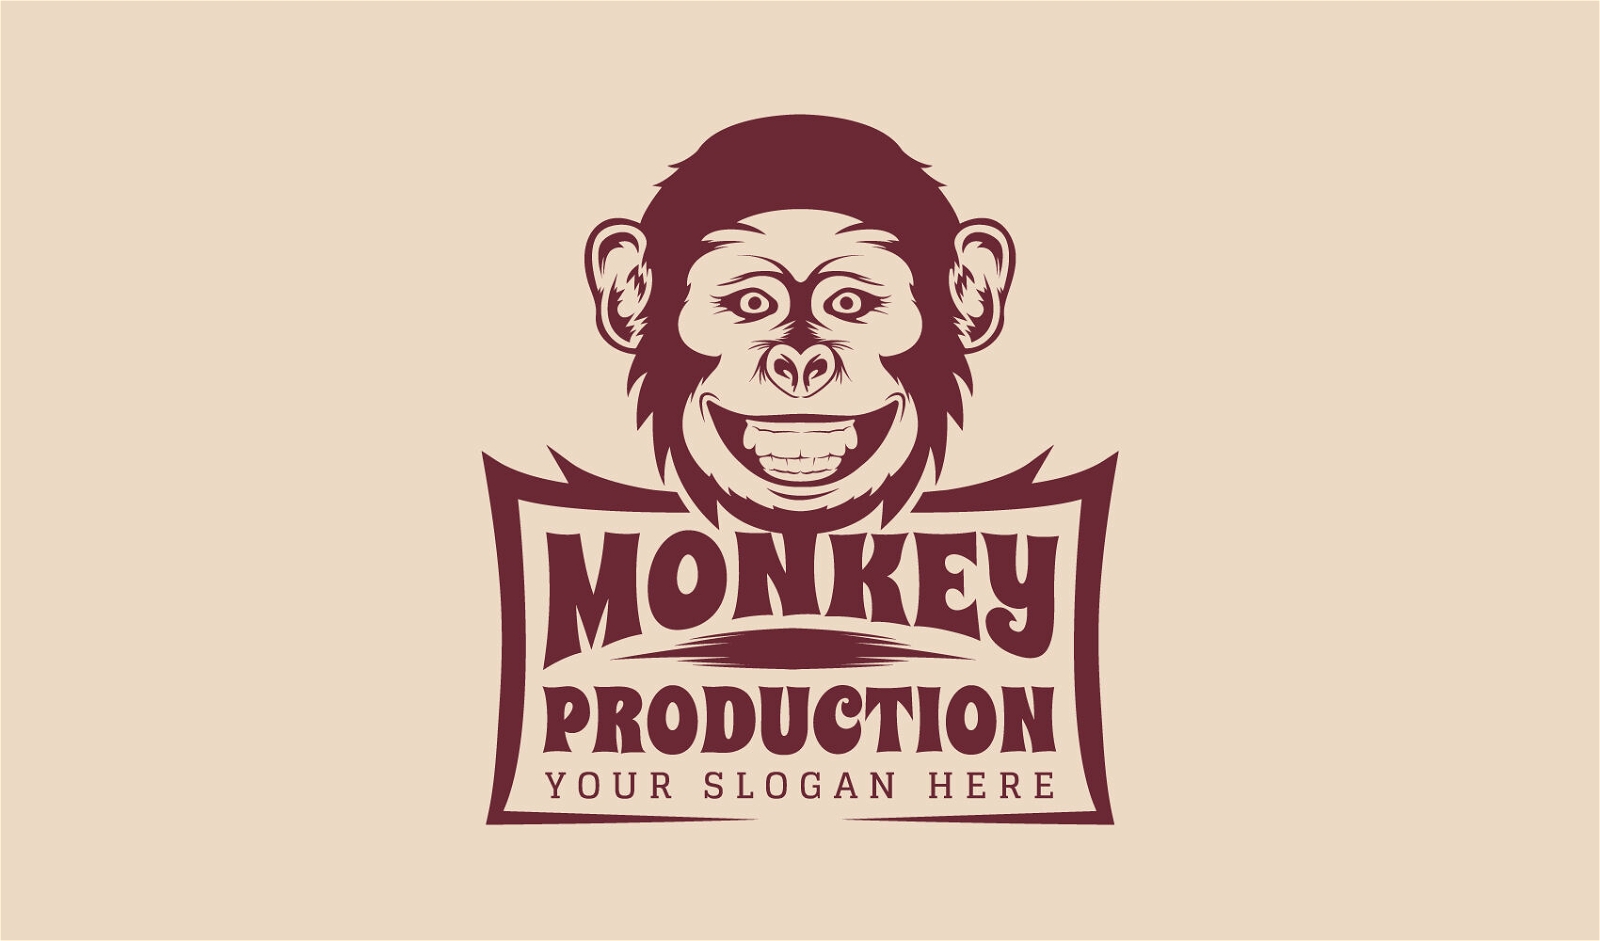 Monkey logo template design